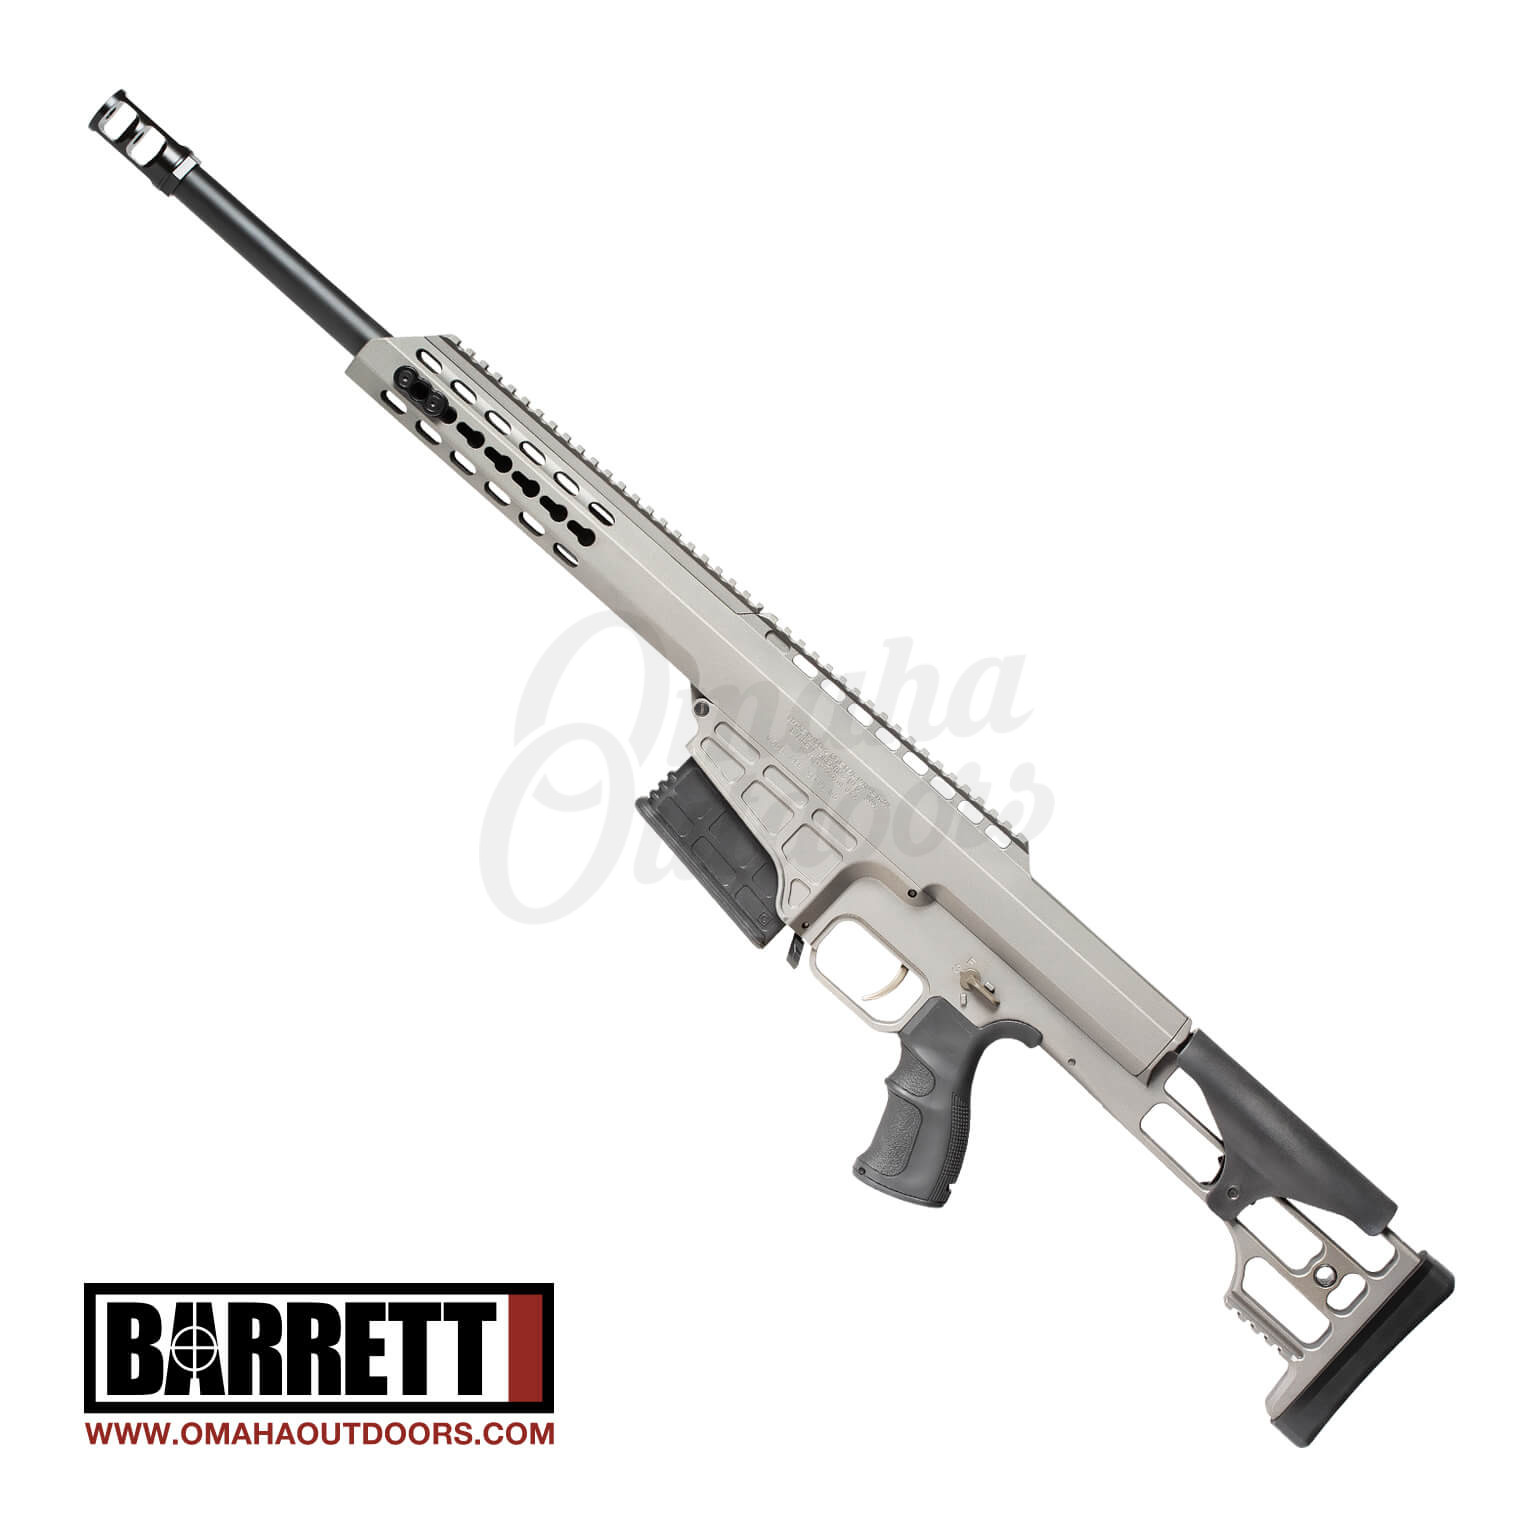 Barrett 50 BMG Rifle finished in Coyote M17 Tan